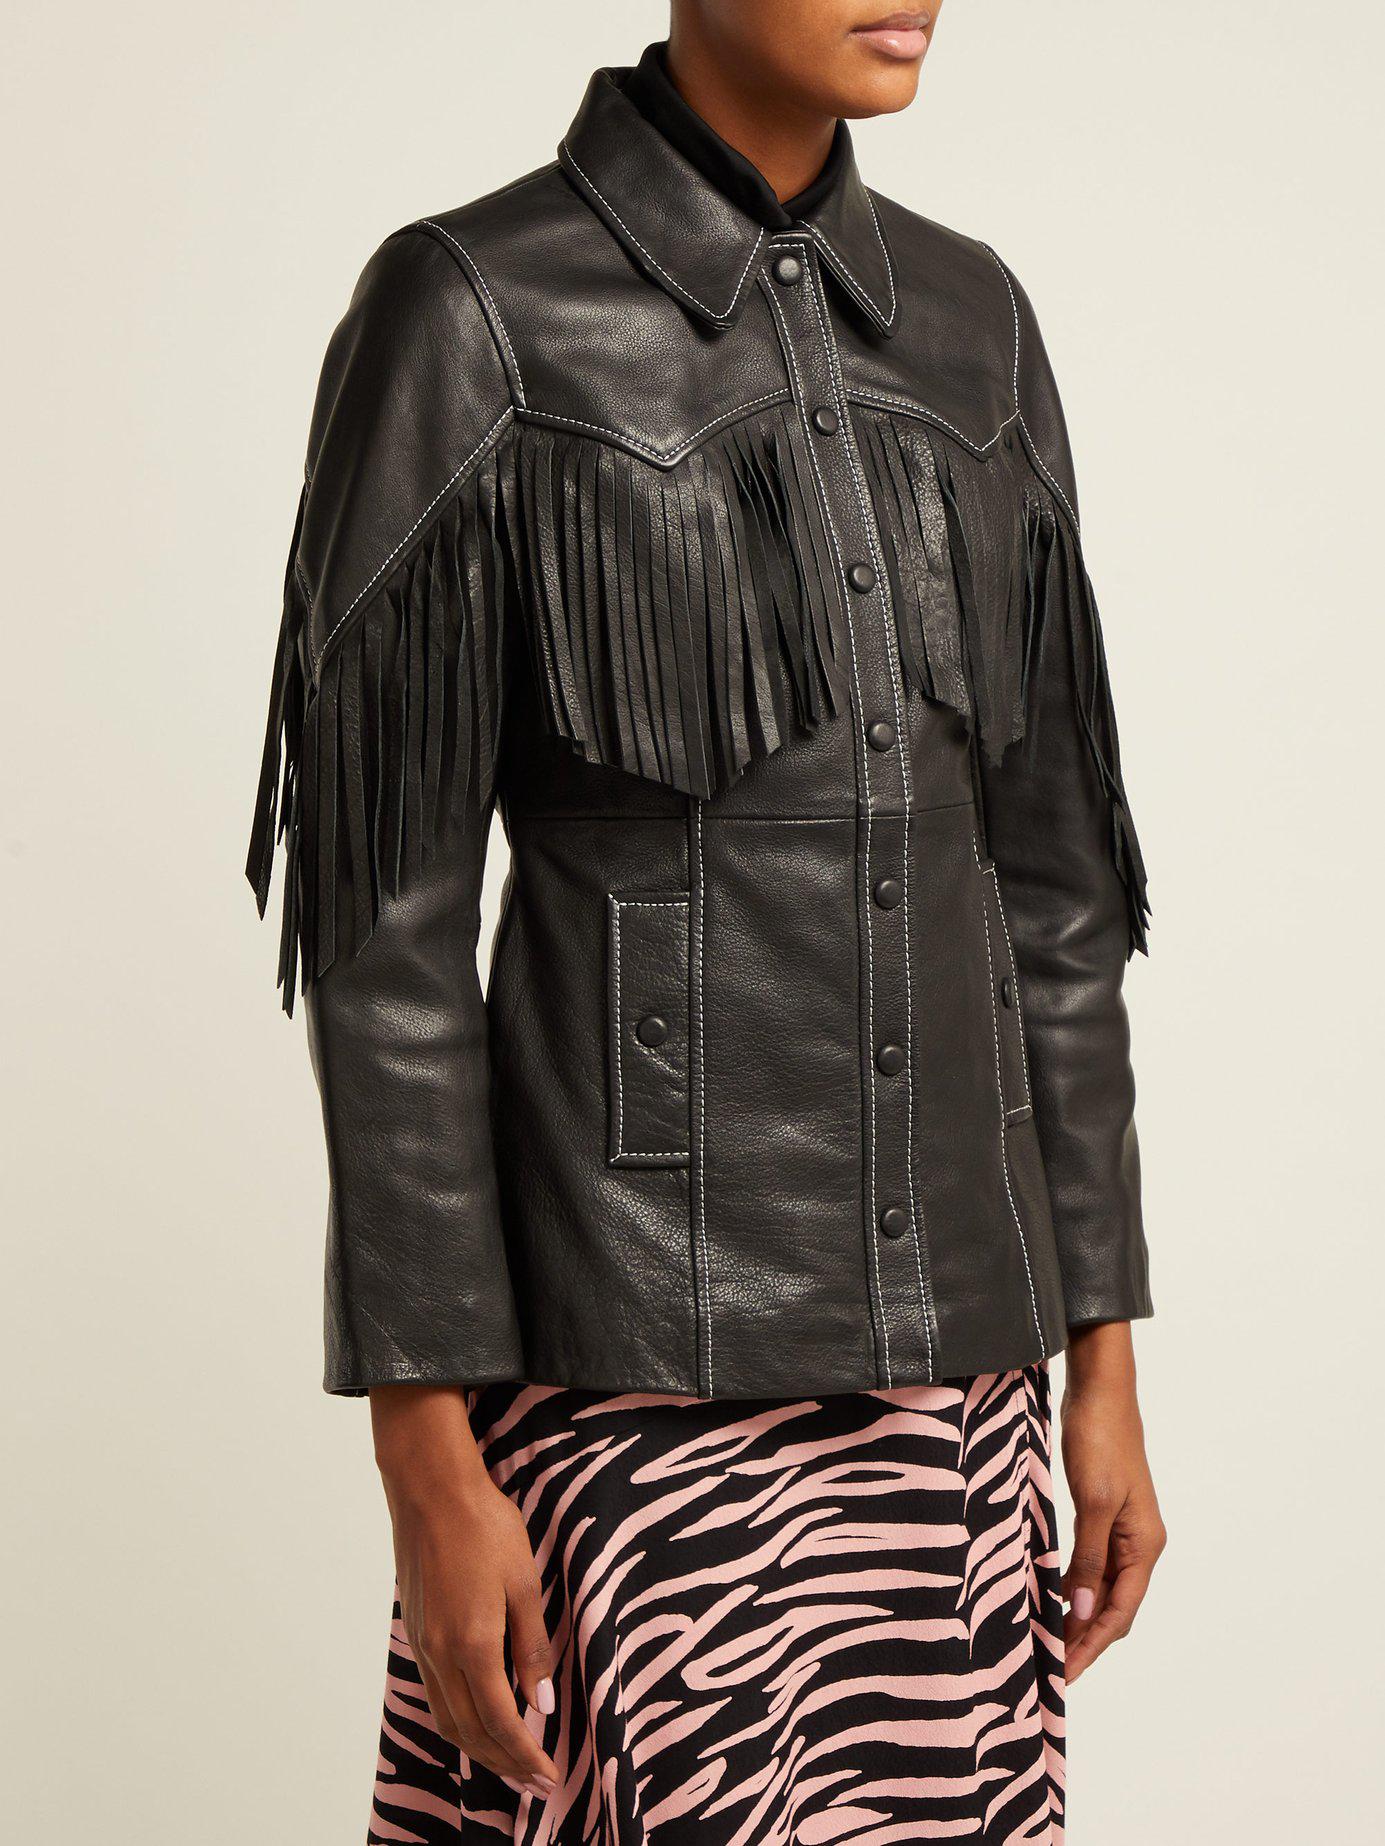 Ganni Angela Fringed Leather Jacket in Black | Lyst